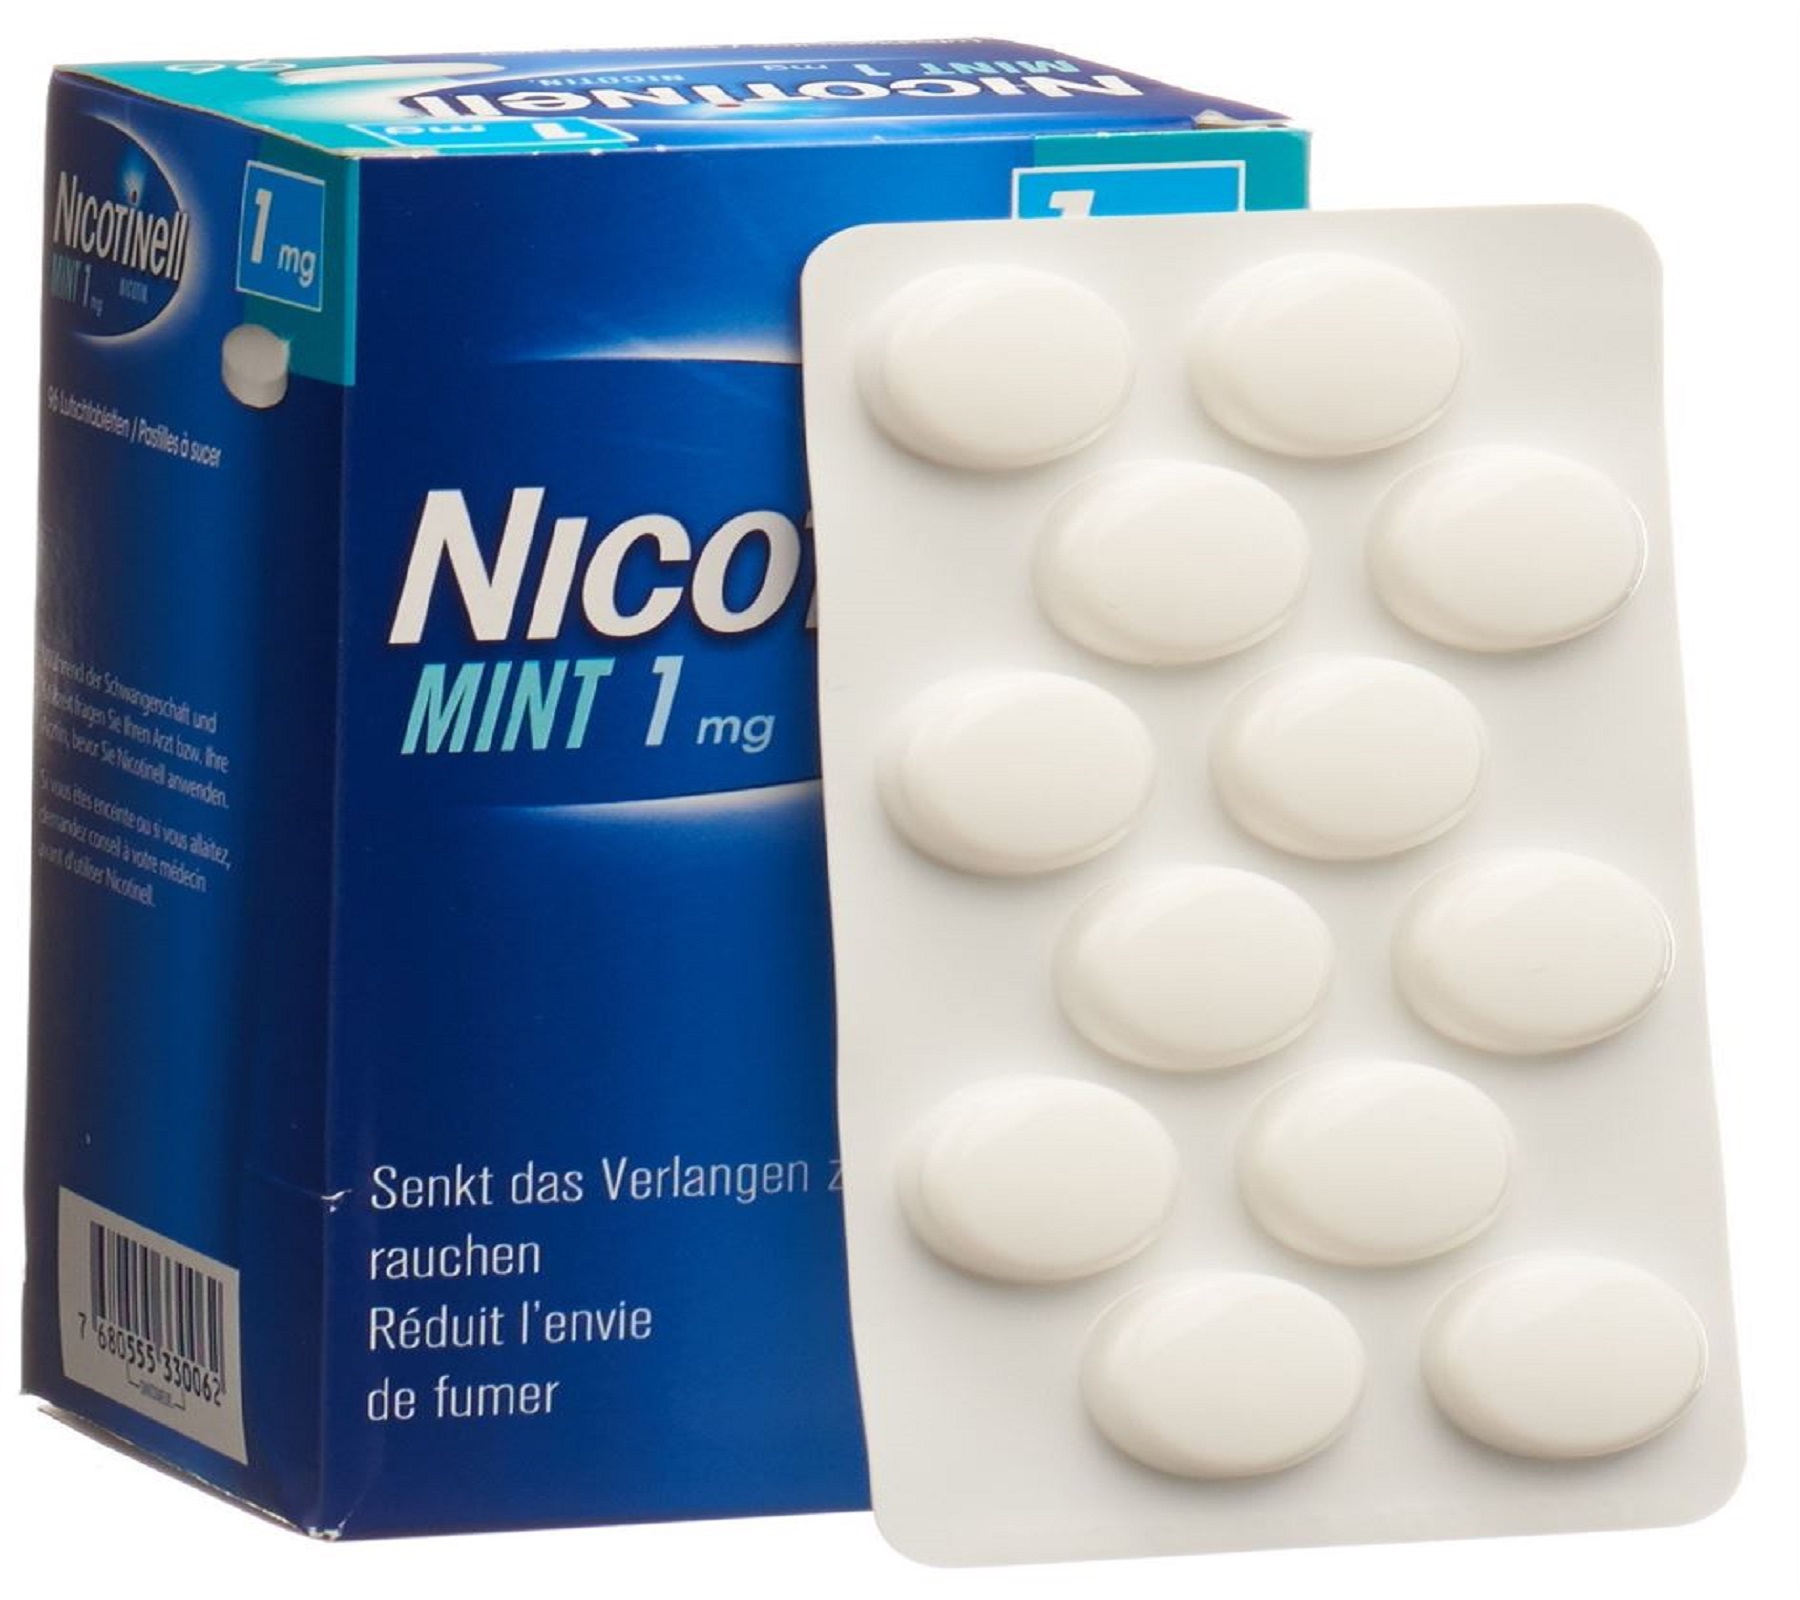 Nicotinell Mint 1 mg - Lutschtabletten